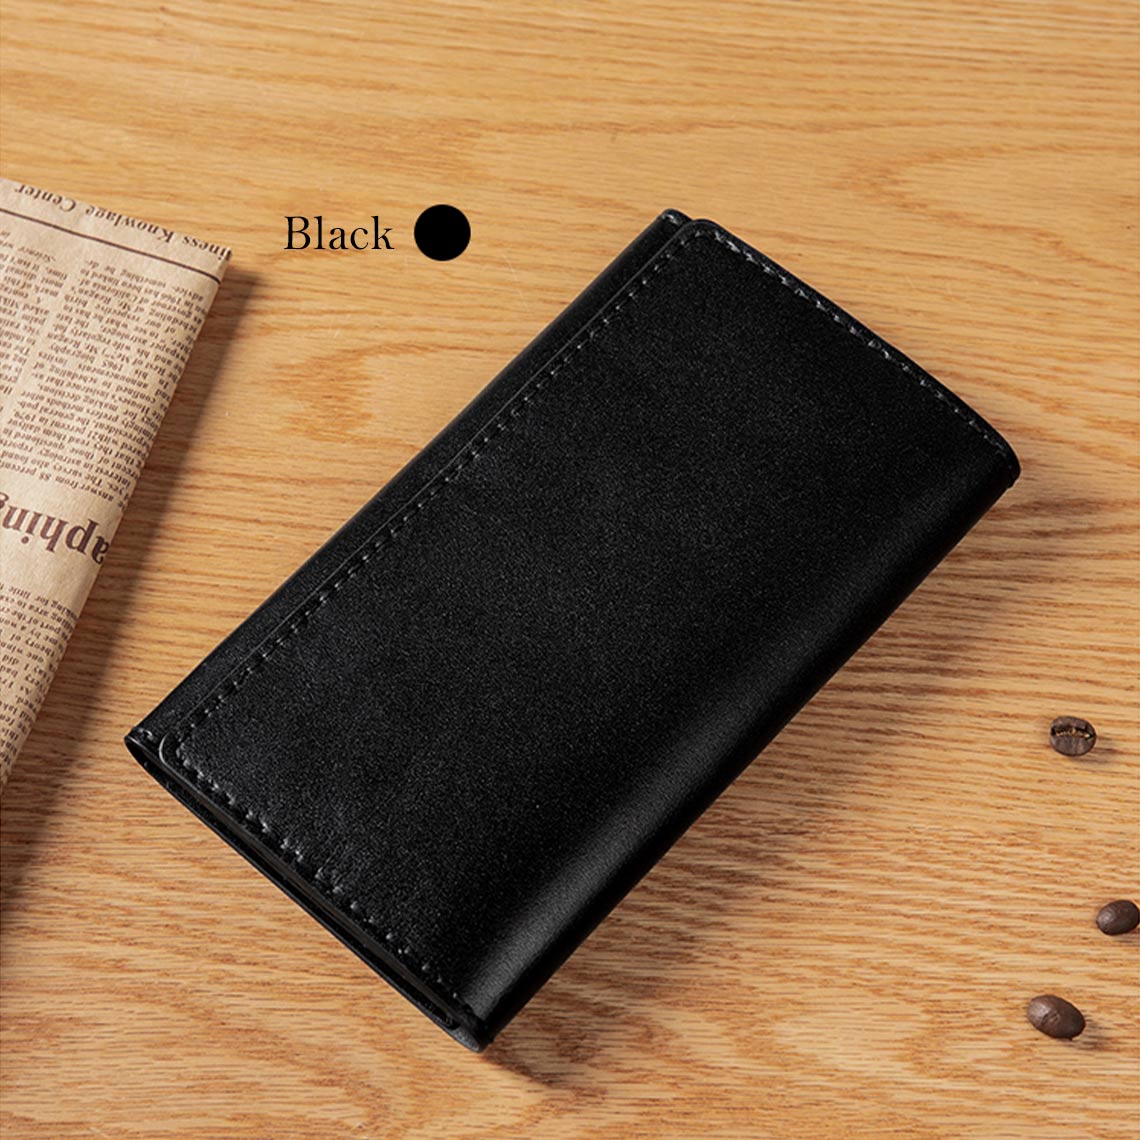 Handmade genuine leather long wallet kit | Black bifold long wallet